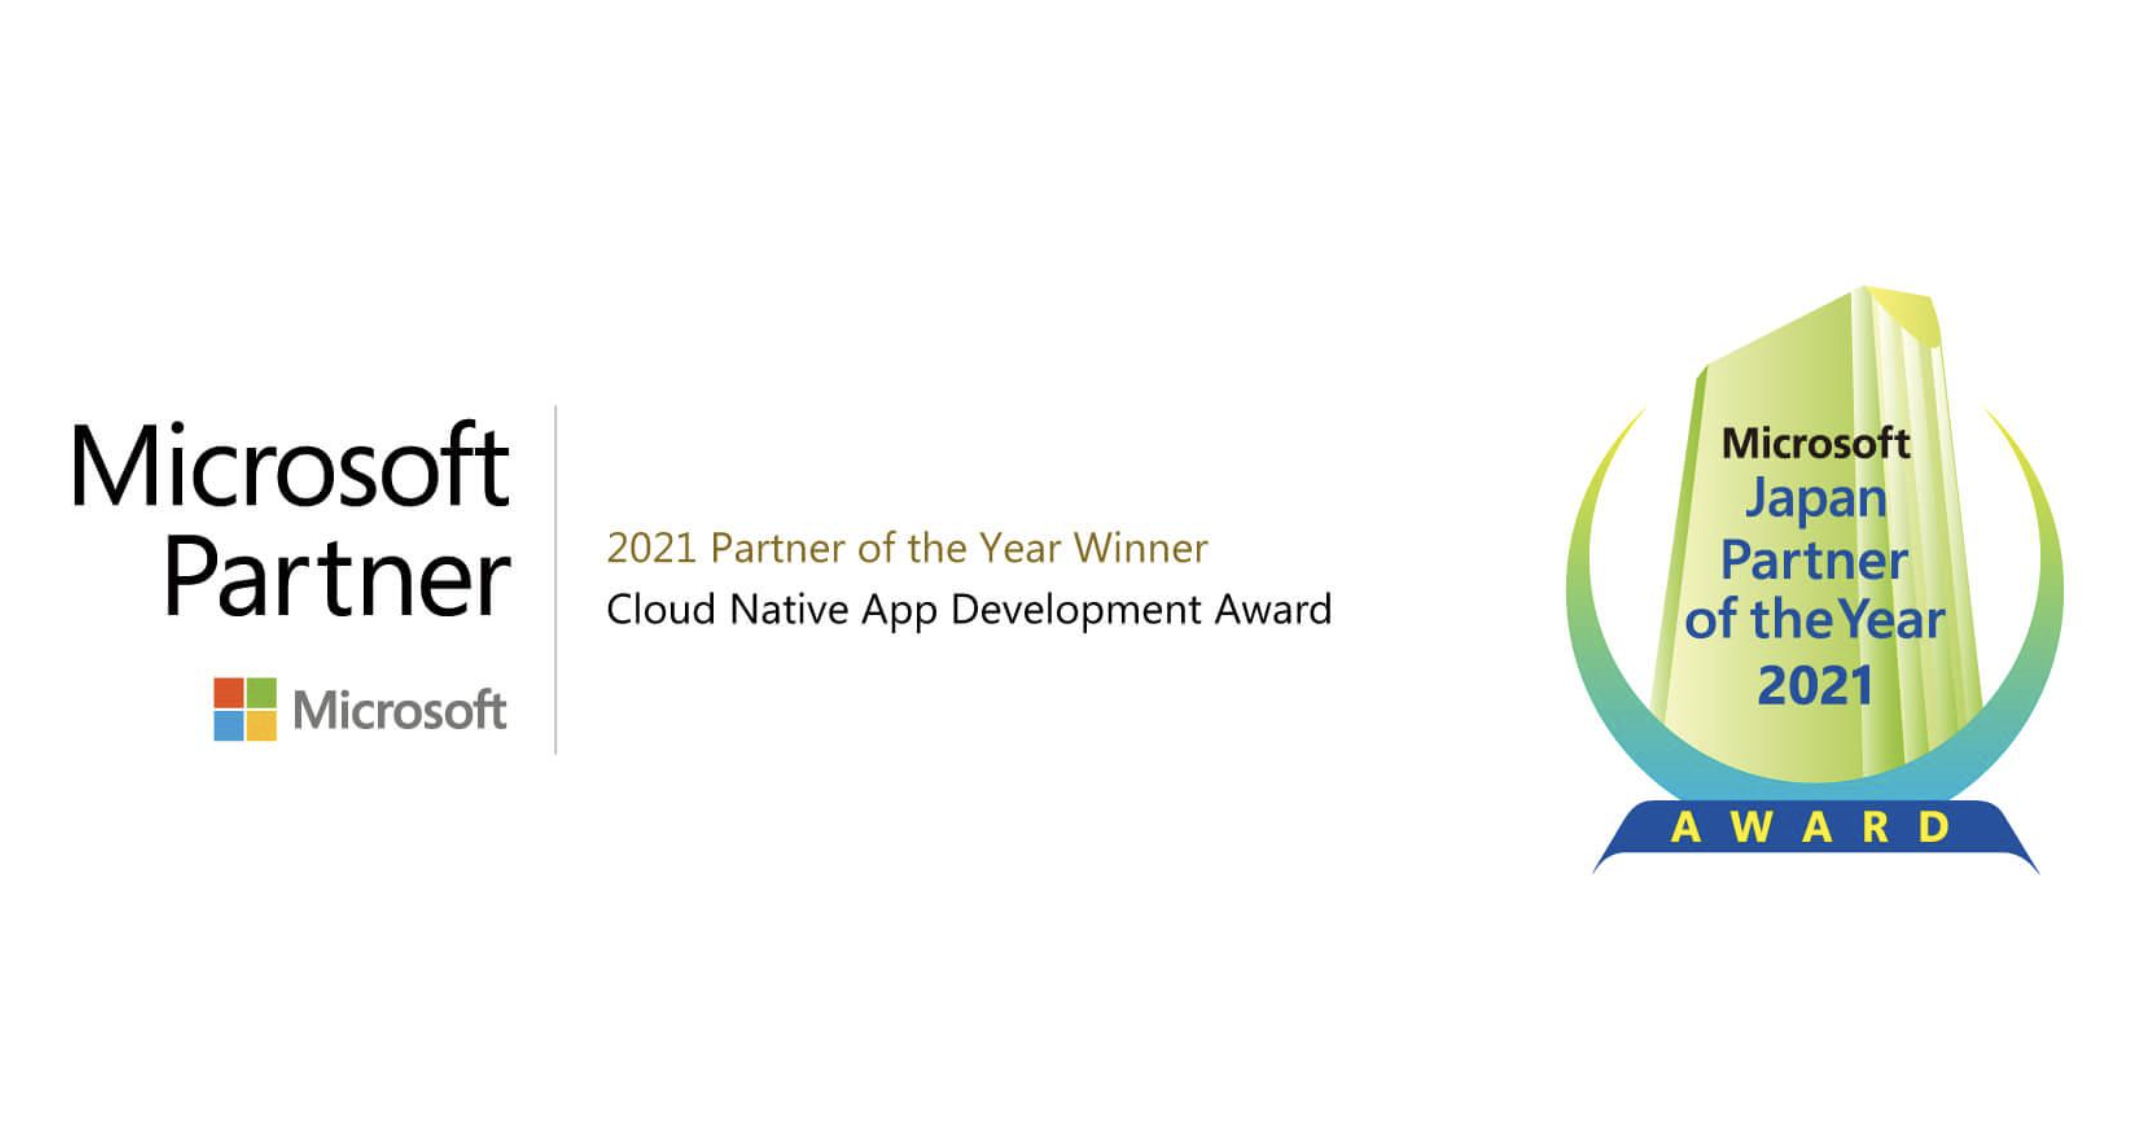 2021 Microsoft Partner of the Year Awards
「Cloud Native App Development Award」
Microsoft Japan Partner of the Year  2021において「Cloud Native App Developmentアワード」受賞